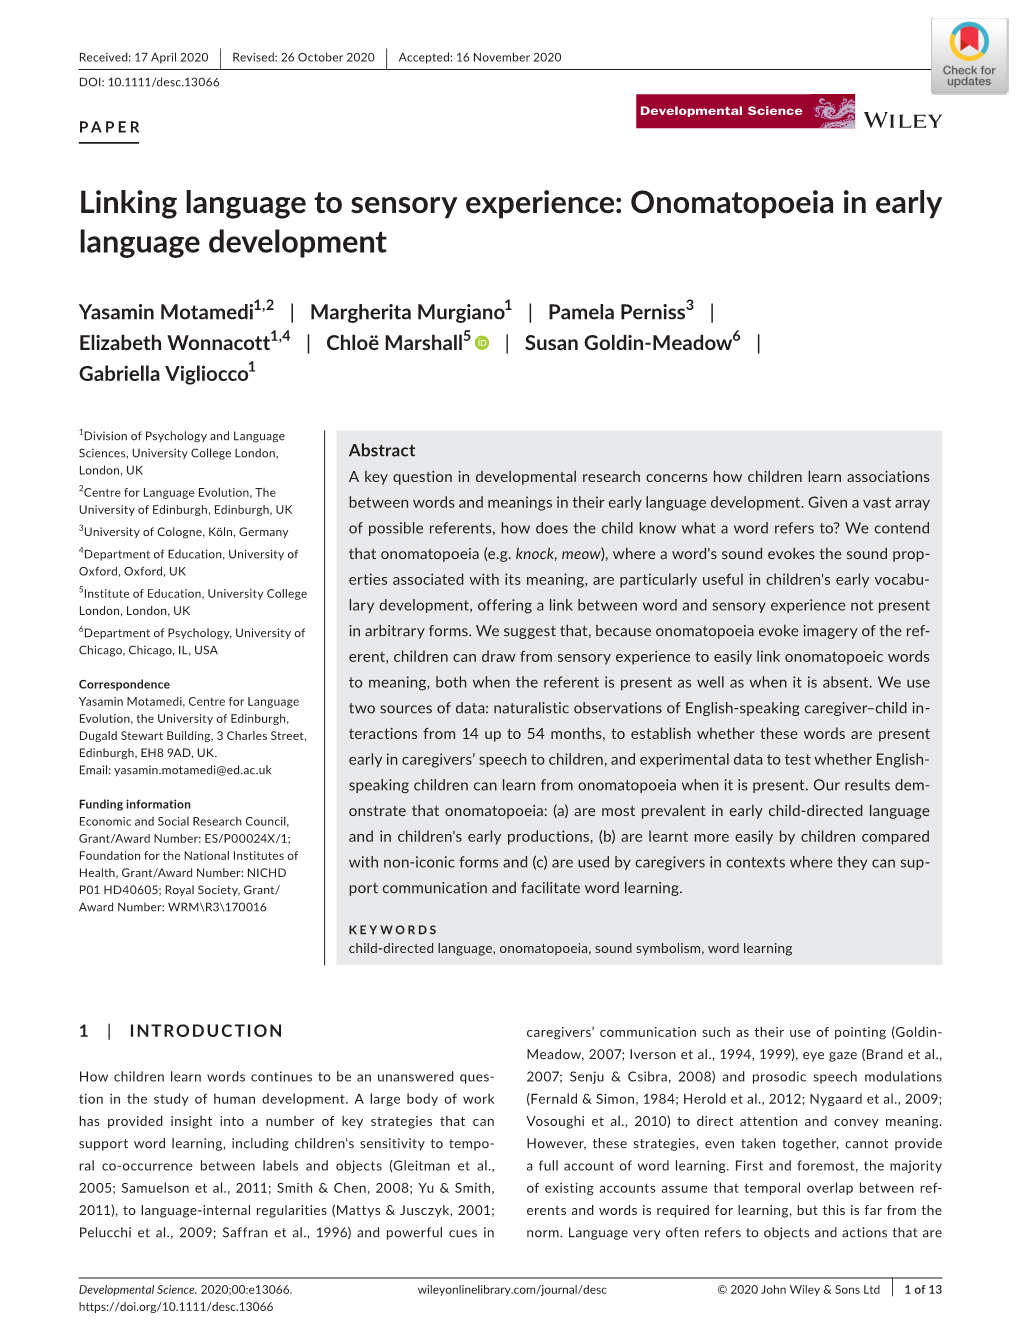 Linking Language to Sensory Experience: Onomatopoeia in Early Language Development